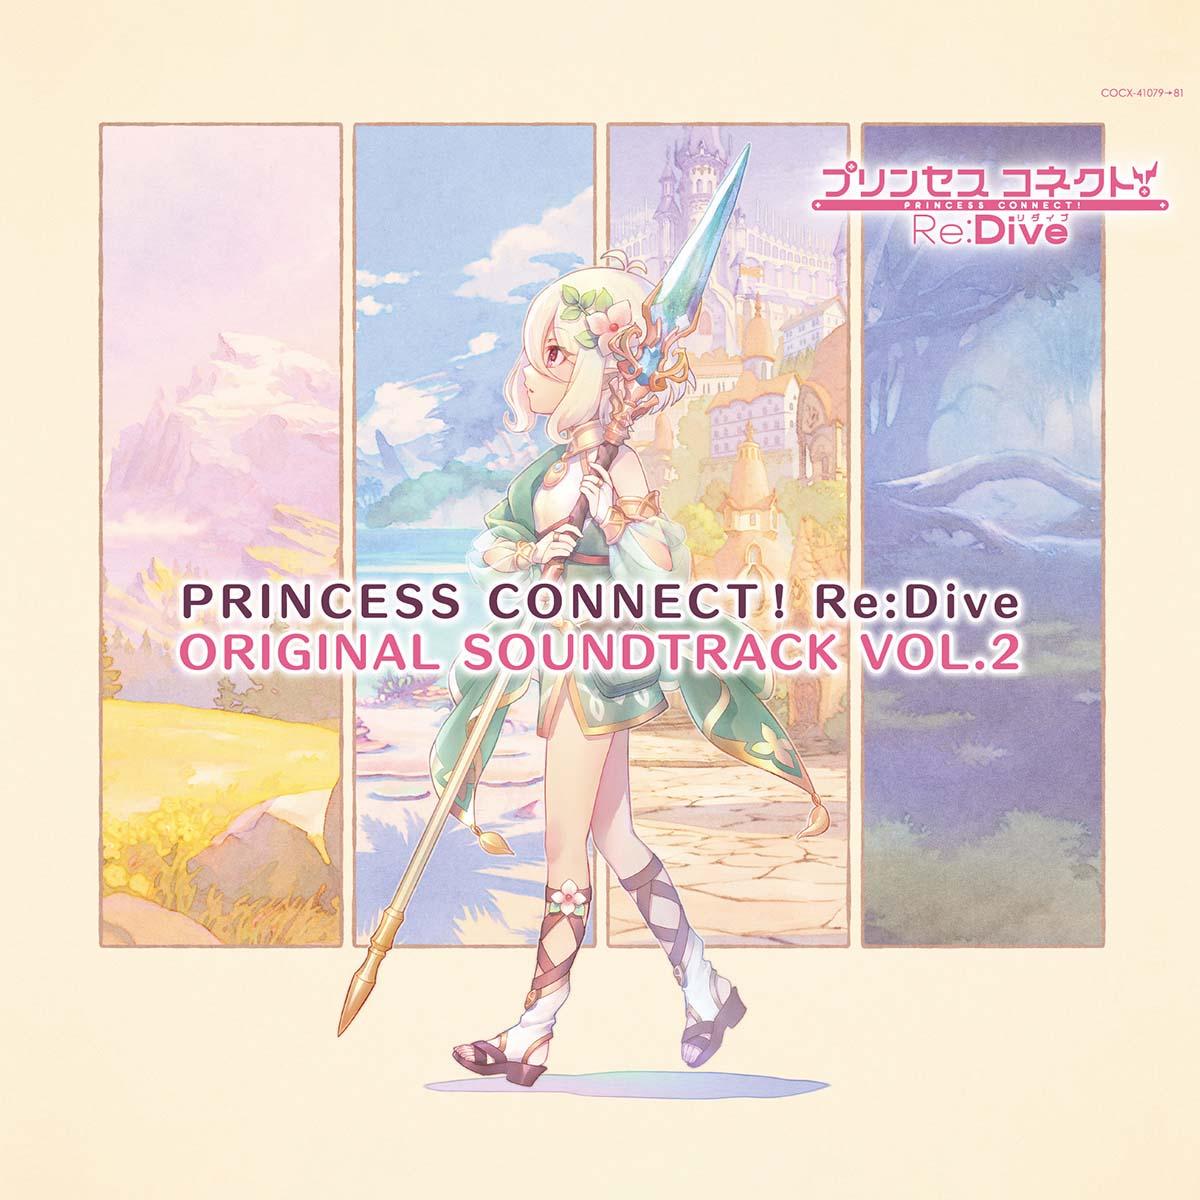 Princess Connect! Re:Dive Original Soundtrack Vol.2